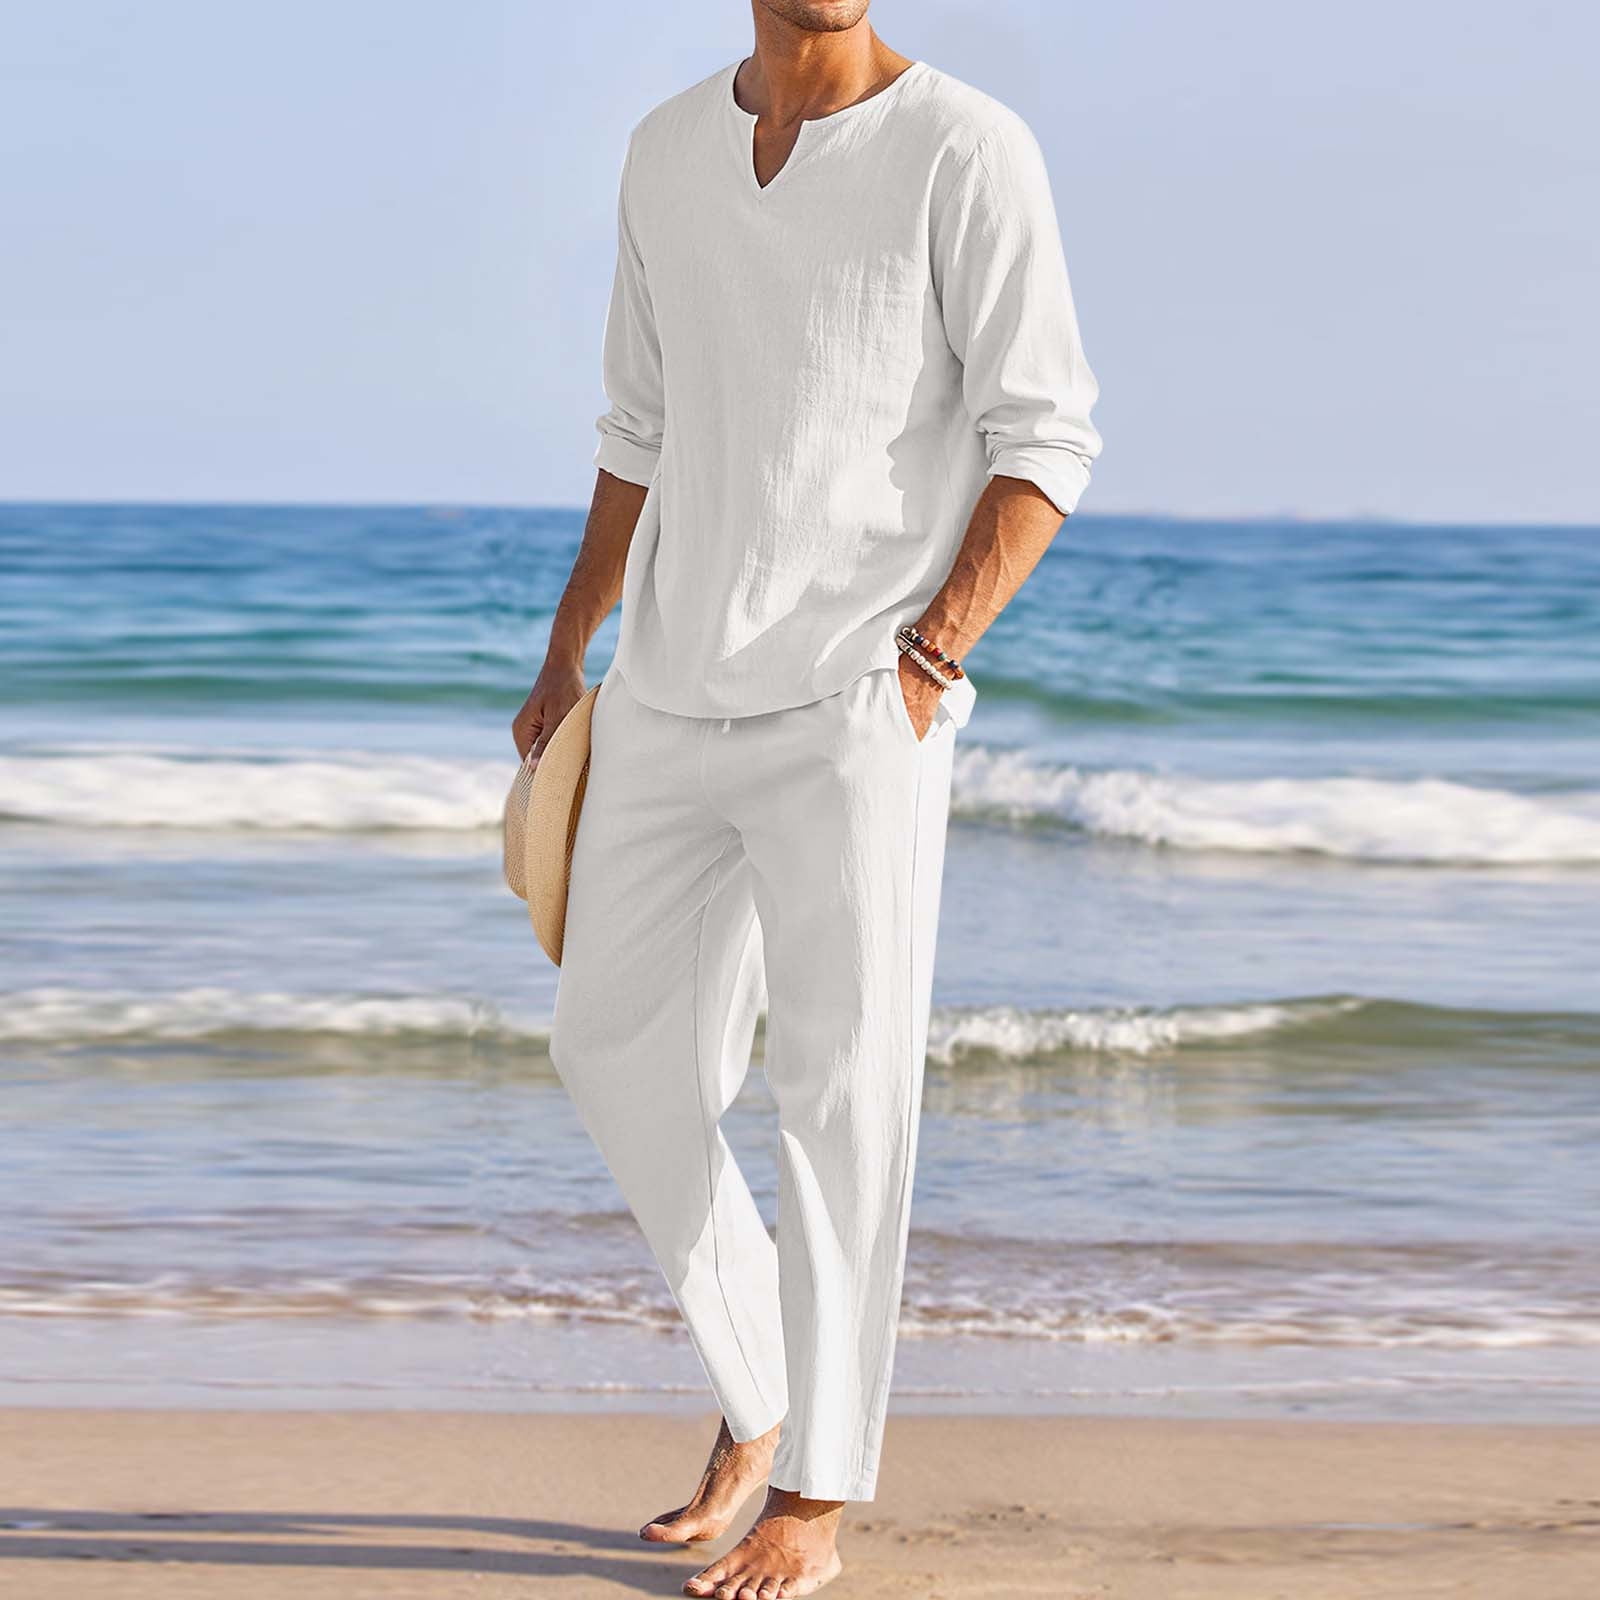 MRULIC suits for men Men Pieces Cotton Linen Set Henley Shirt Long Sleeve  And Casual Beach Pants Summer Yoga Outfits Men Suits White + S 